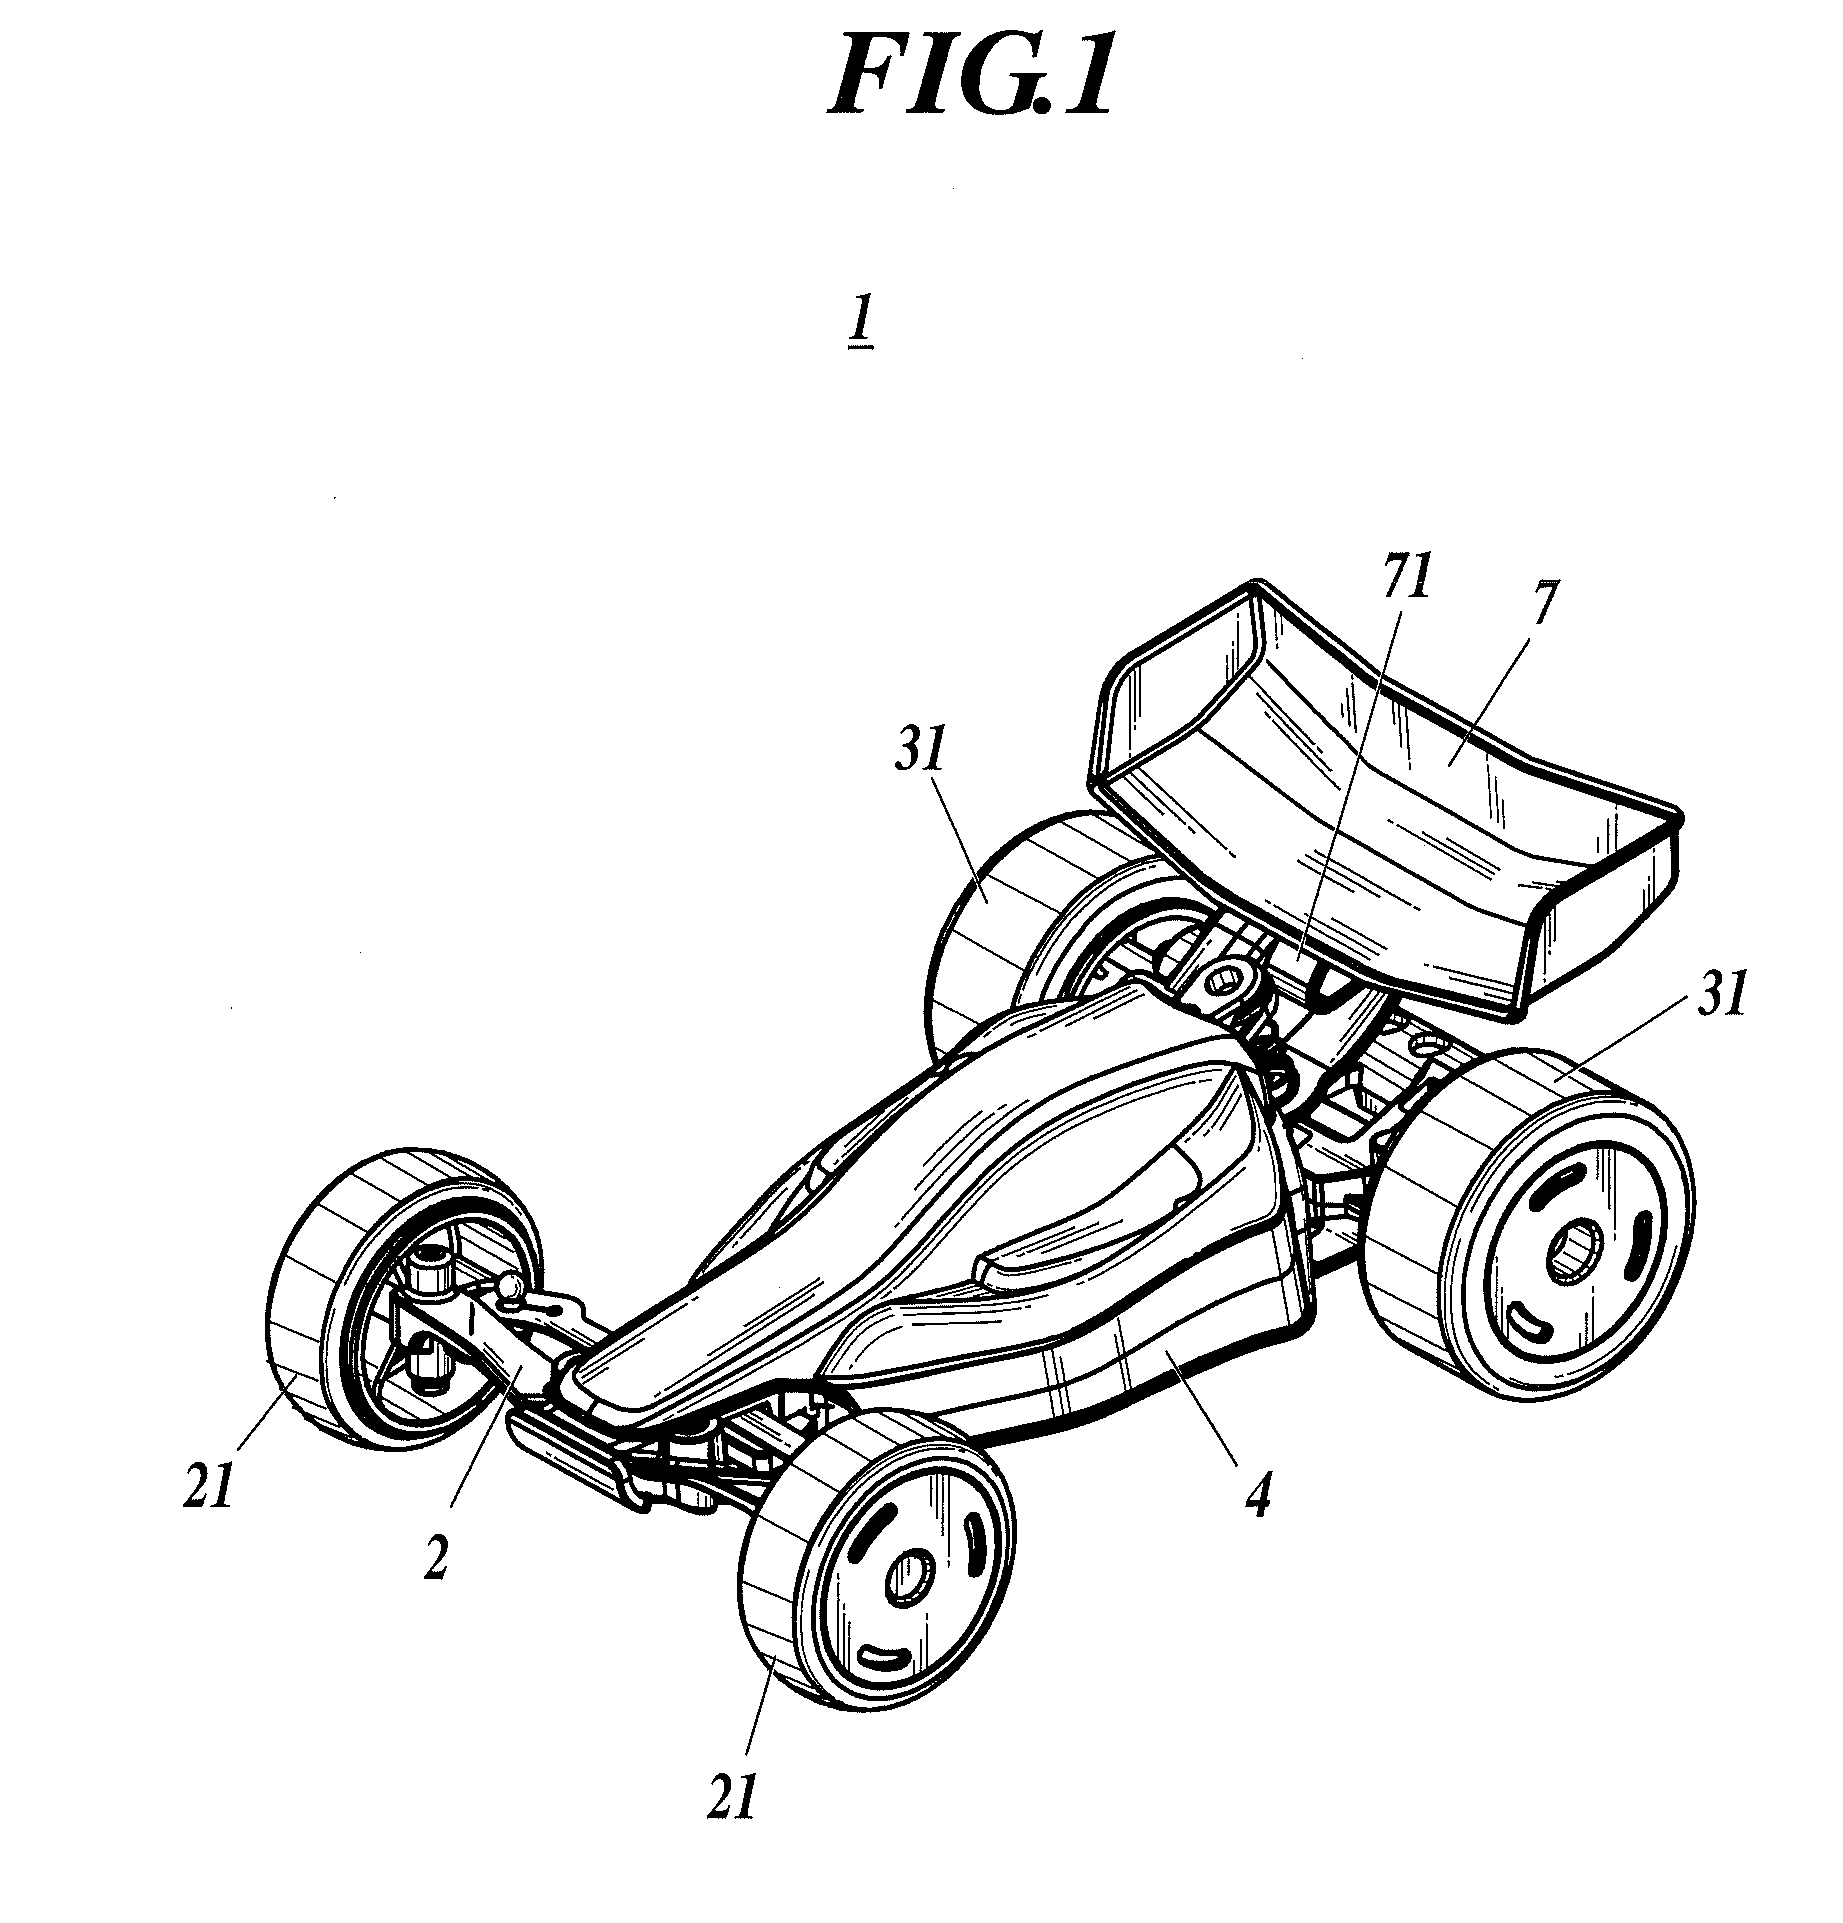 Automobile toy